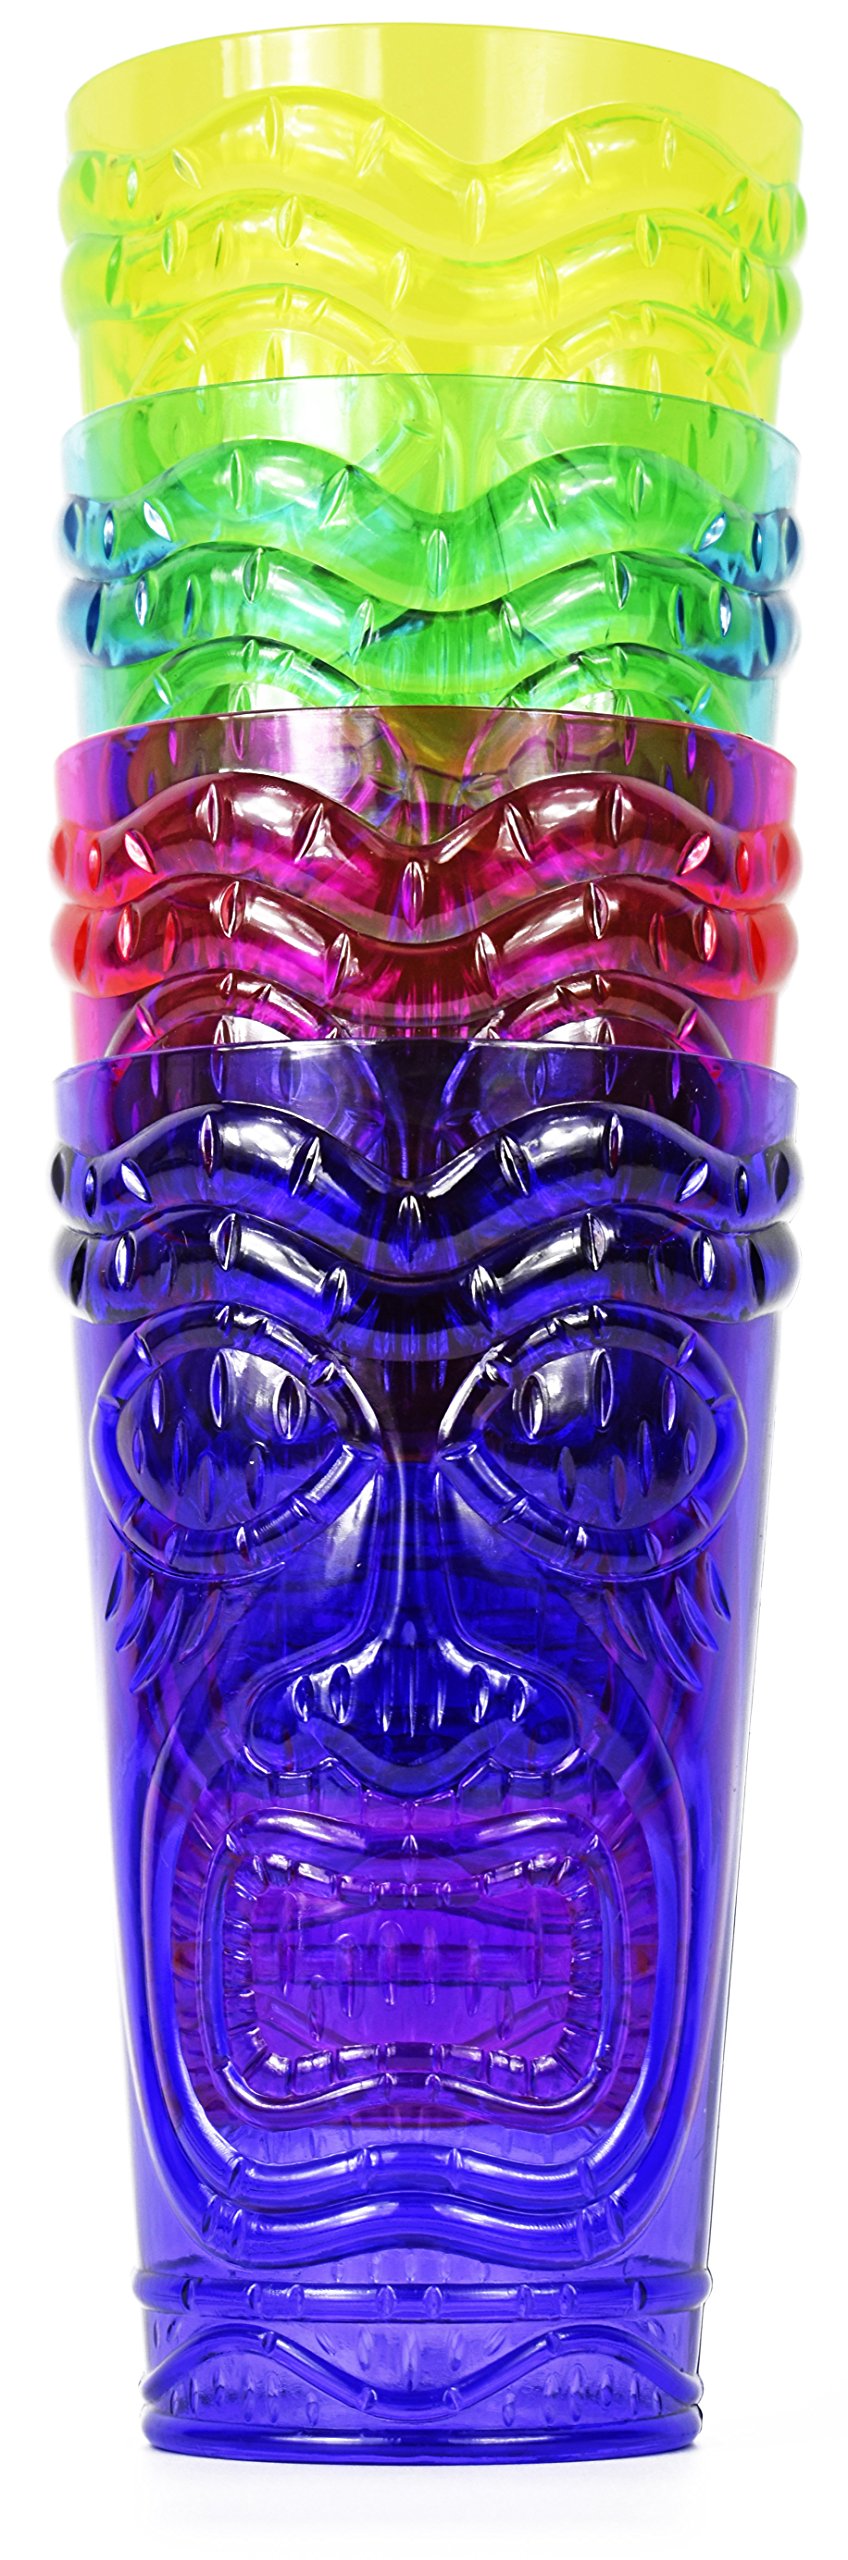 Set of 24 Party Tiki Cups! BPA Free 18 Ounce Tumbler Drinkware Set Luau Shape! 4 Bright Colors! Tiki Mugs! Reusable Plastic Party Cups!